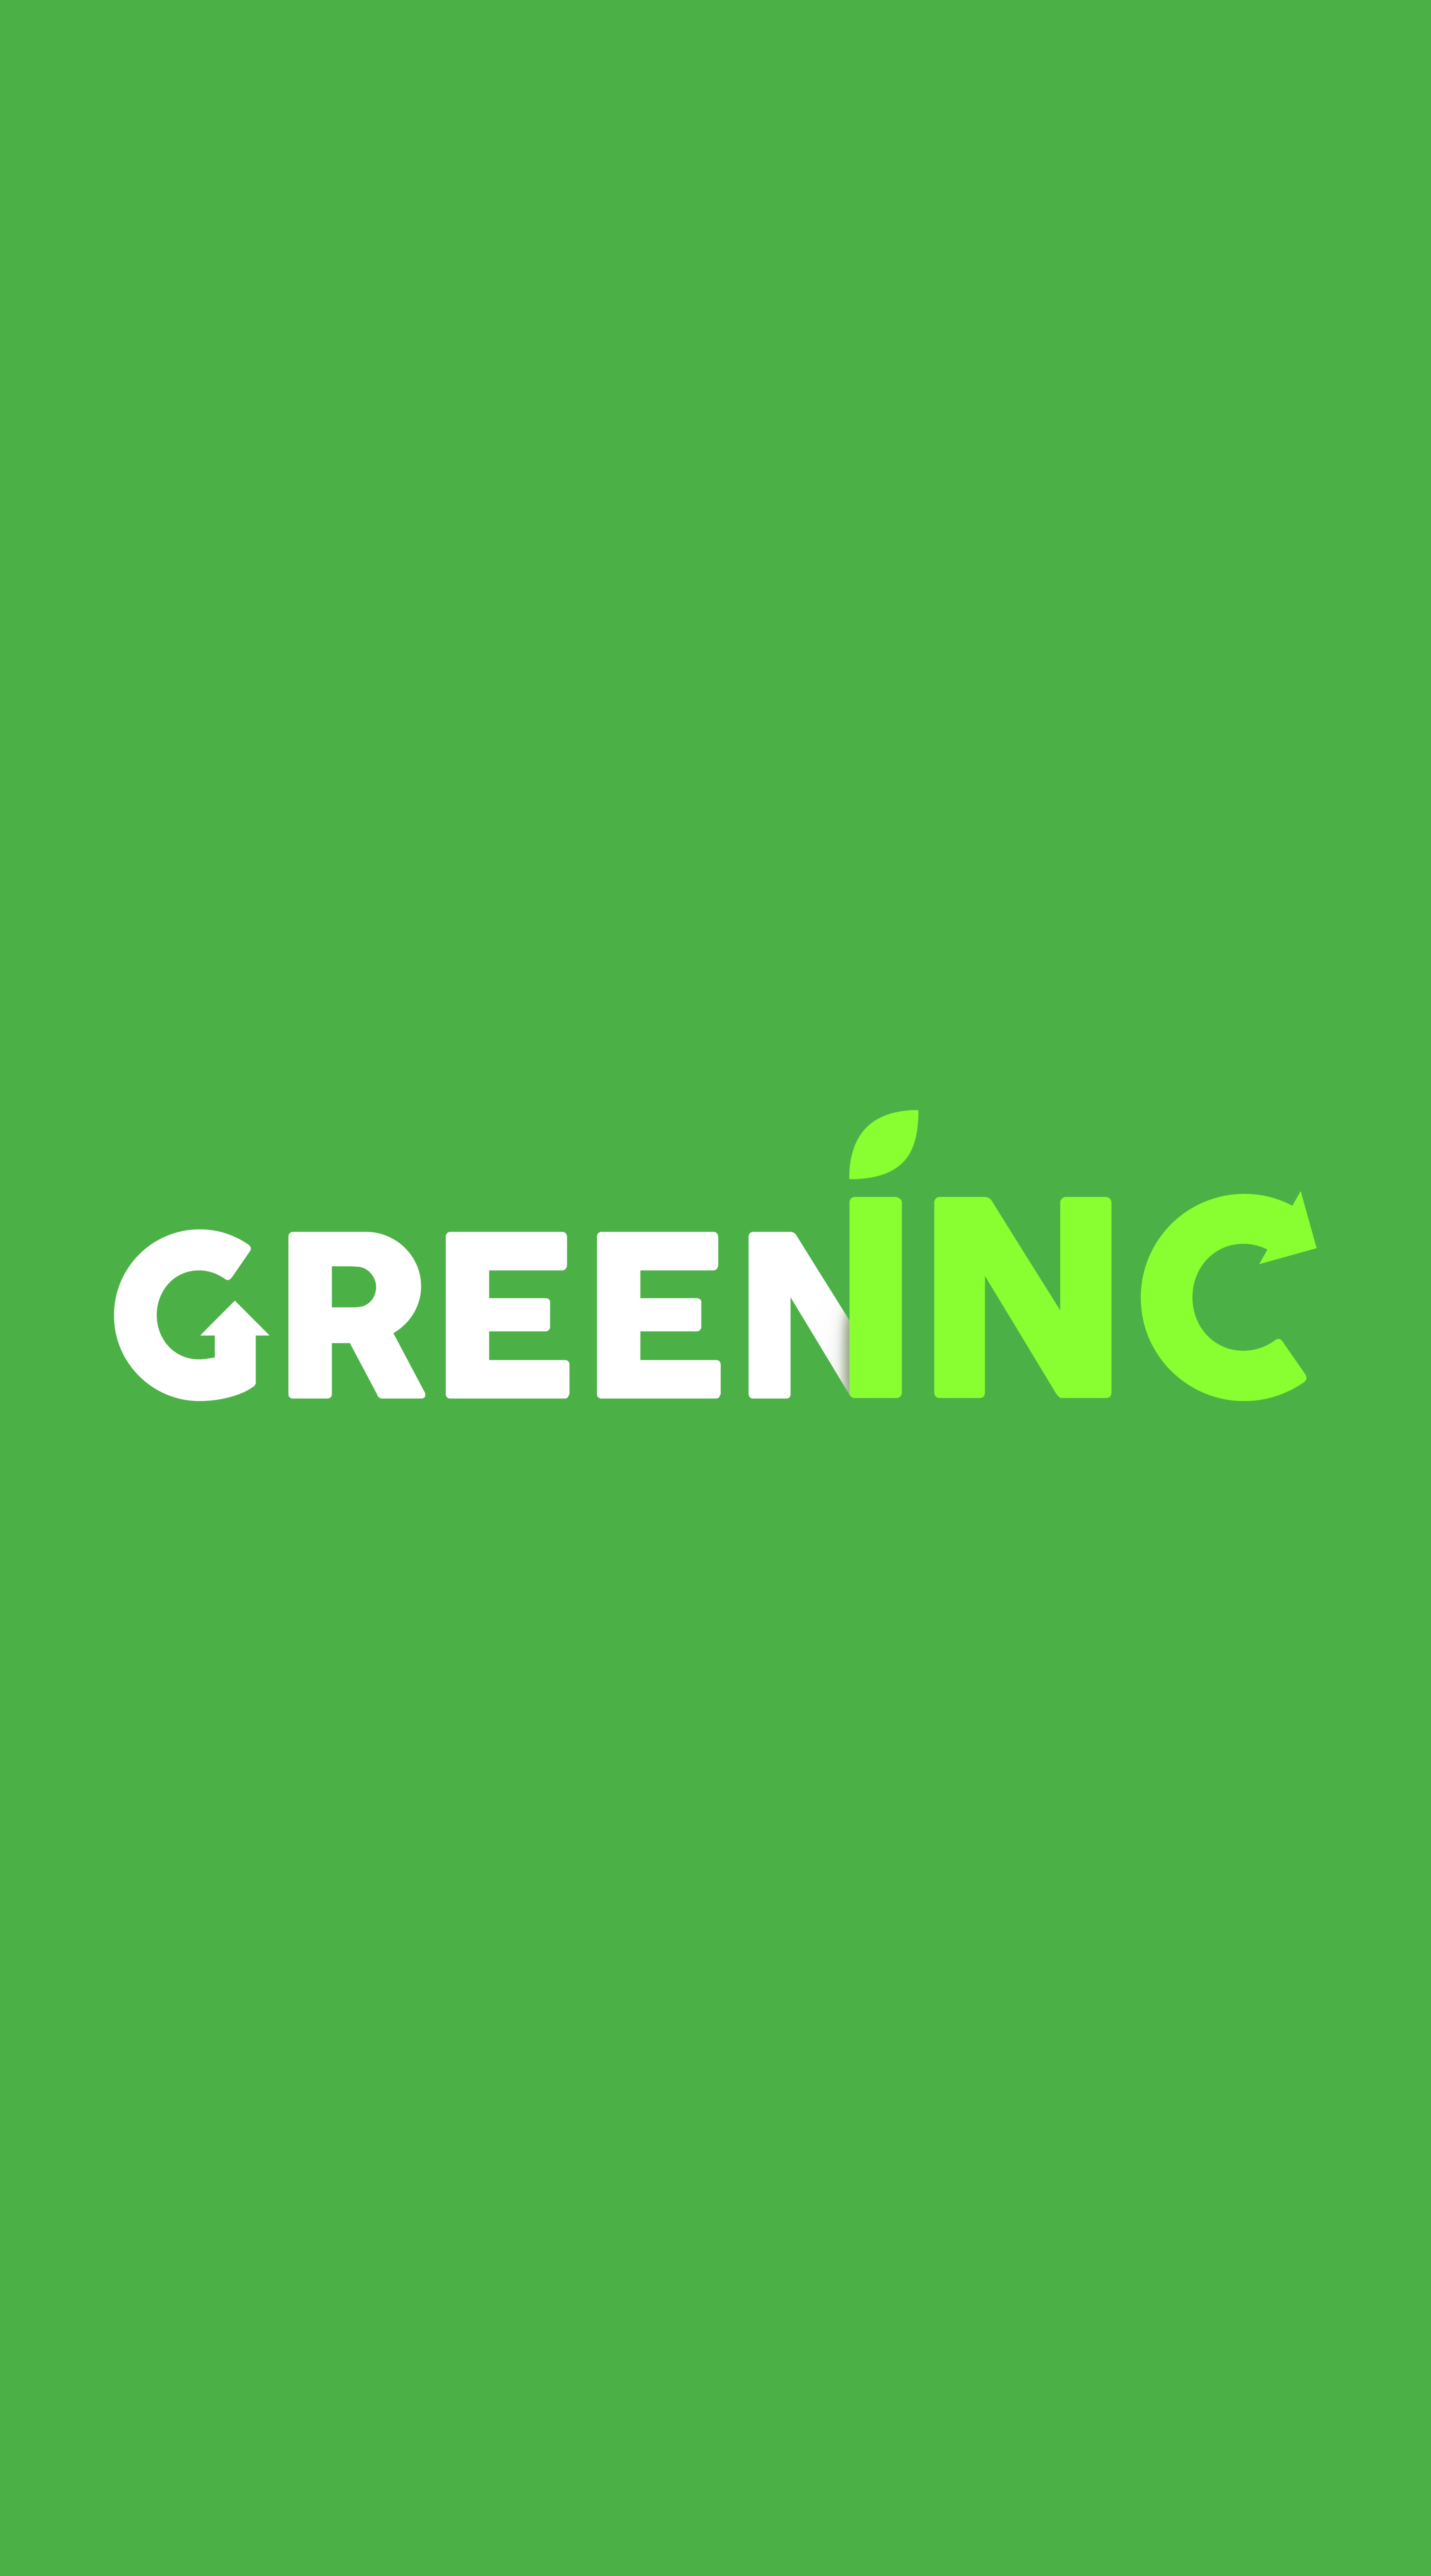 Green Inc Vinyl Banner Vertical.jpg